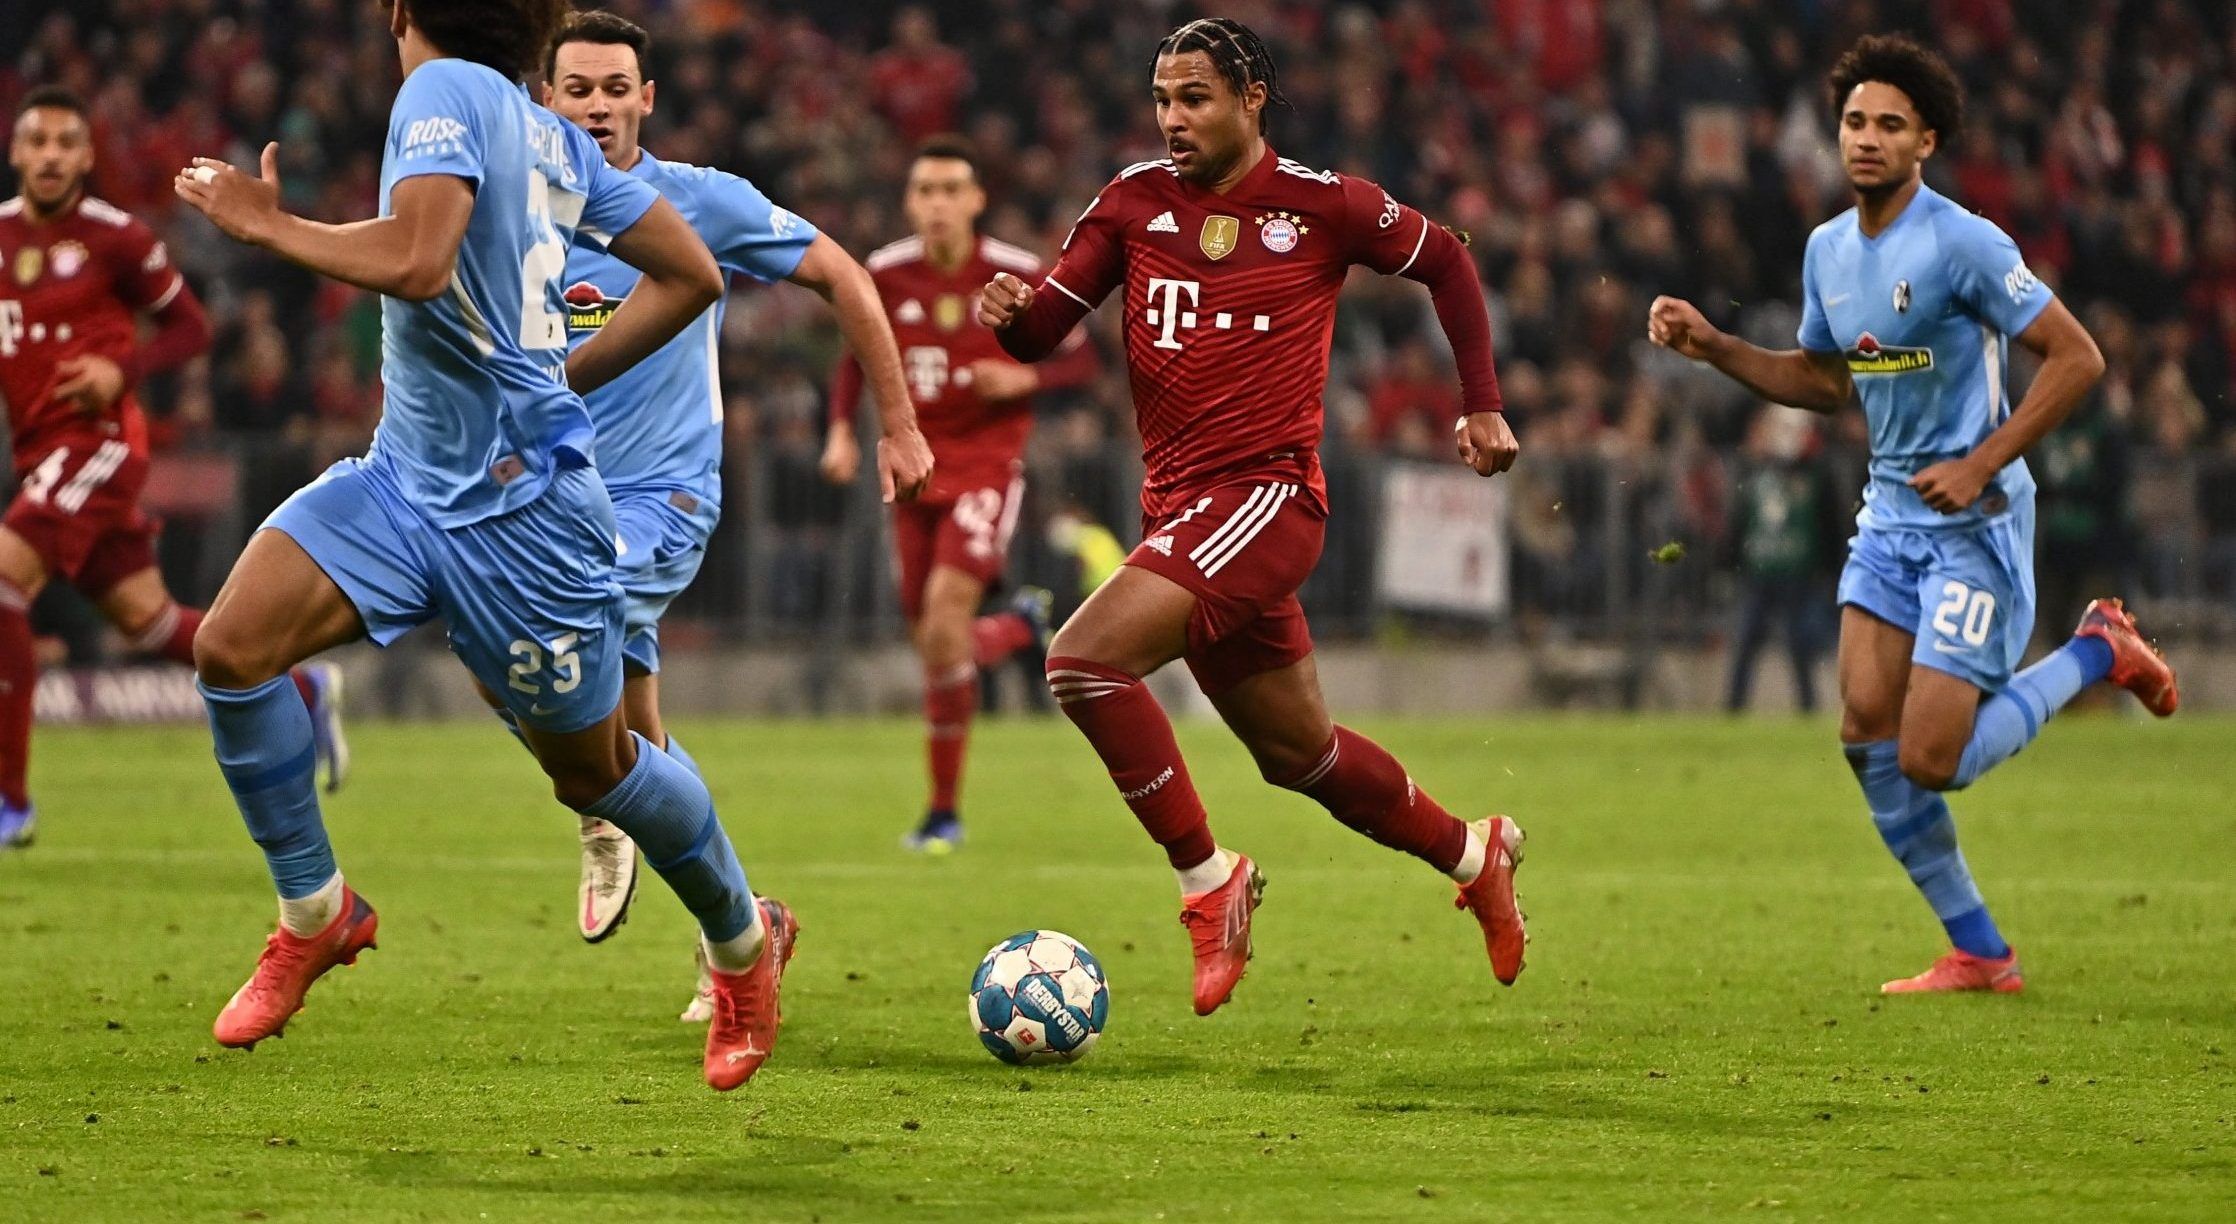 Bayern Munich attacker Serge Gnabry on the ball against Freiburg in the Bundesliga